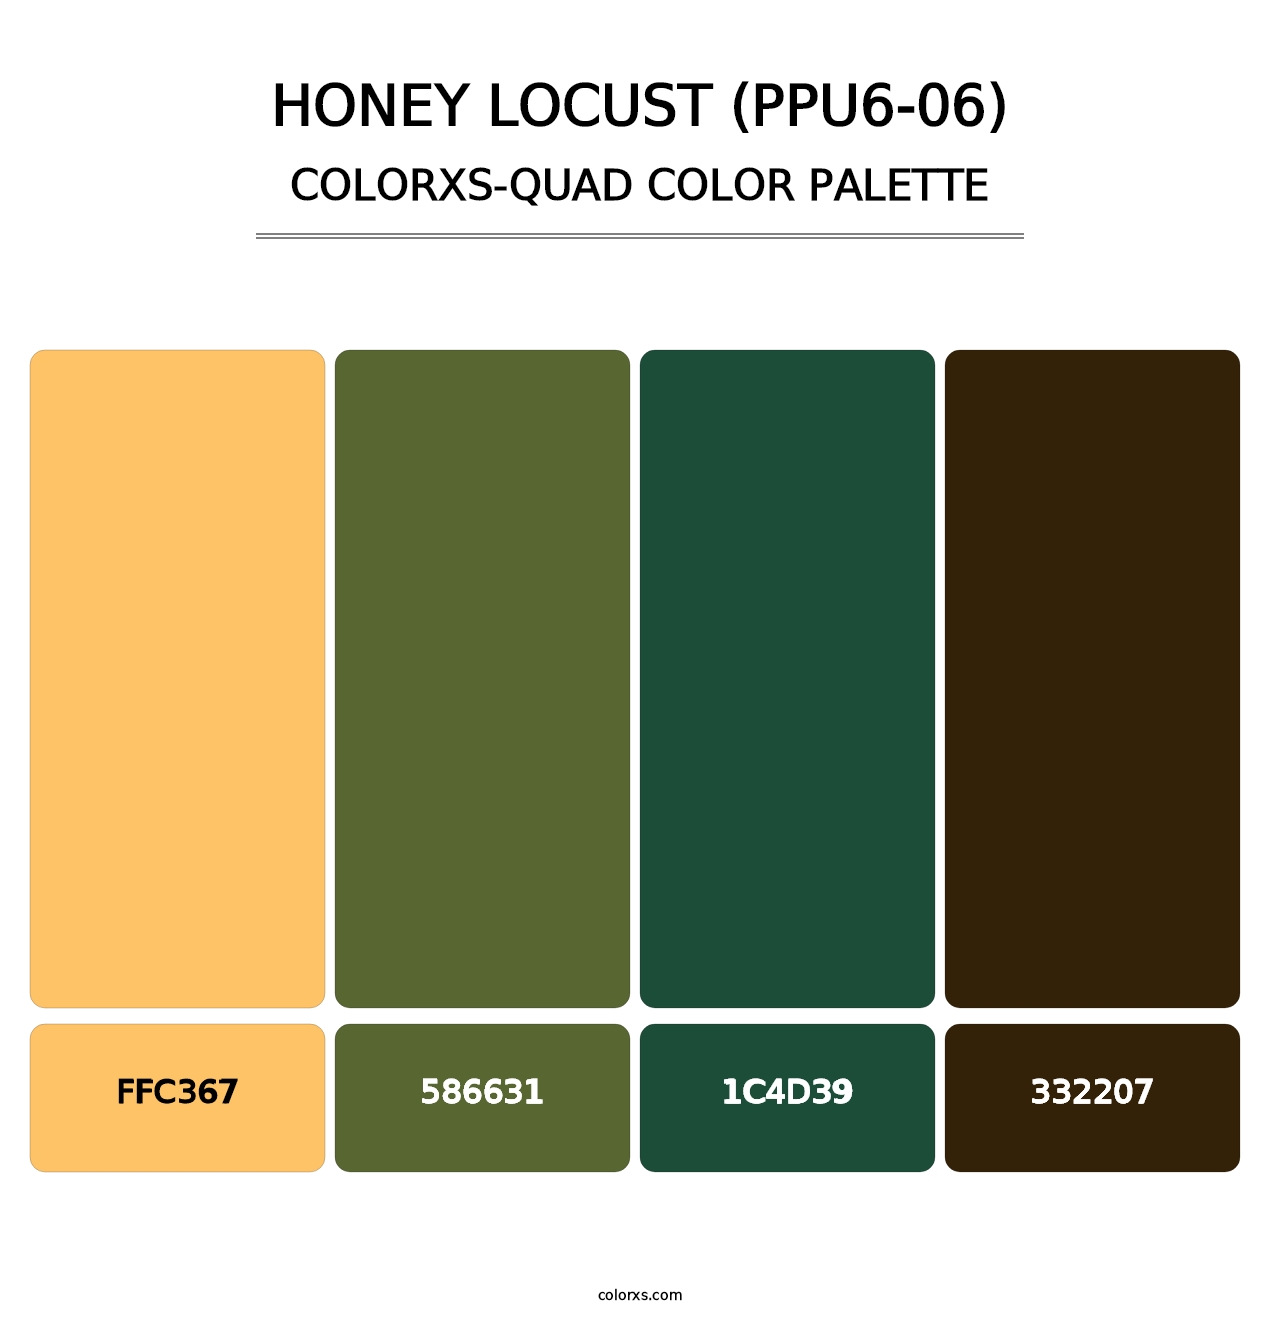 Honey Locust (PPU6-06) - Colorxs Quad Palette